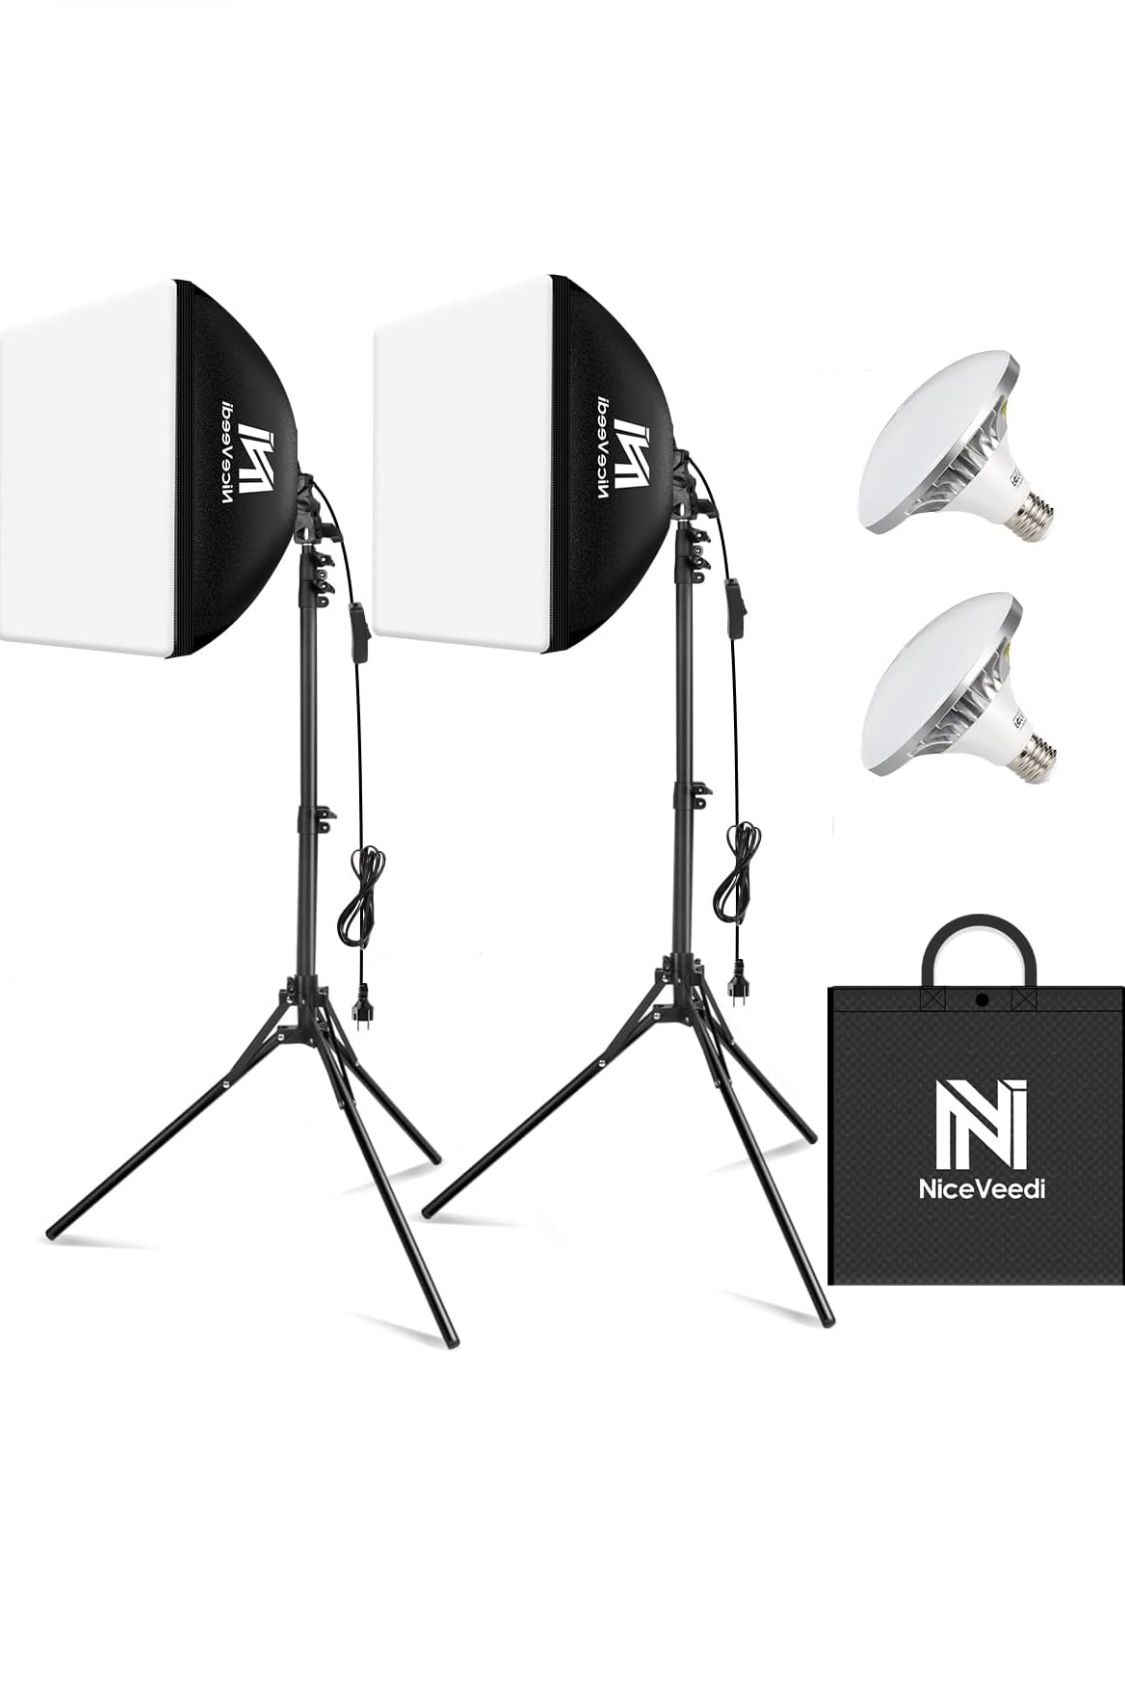 Softbox Lighting Kit, NiceVeedi 2-Pack 16'' x 16'' Softbox Photography Lighting Kit with 63” Tripod